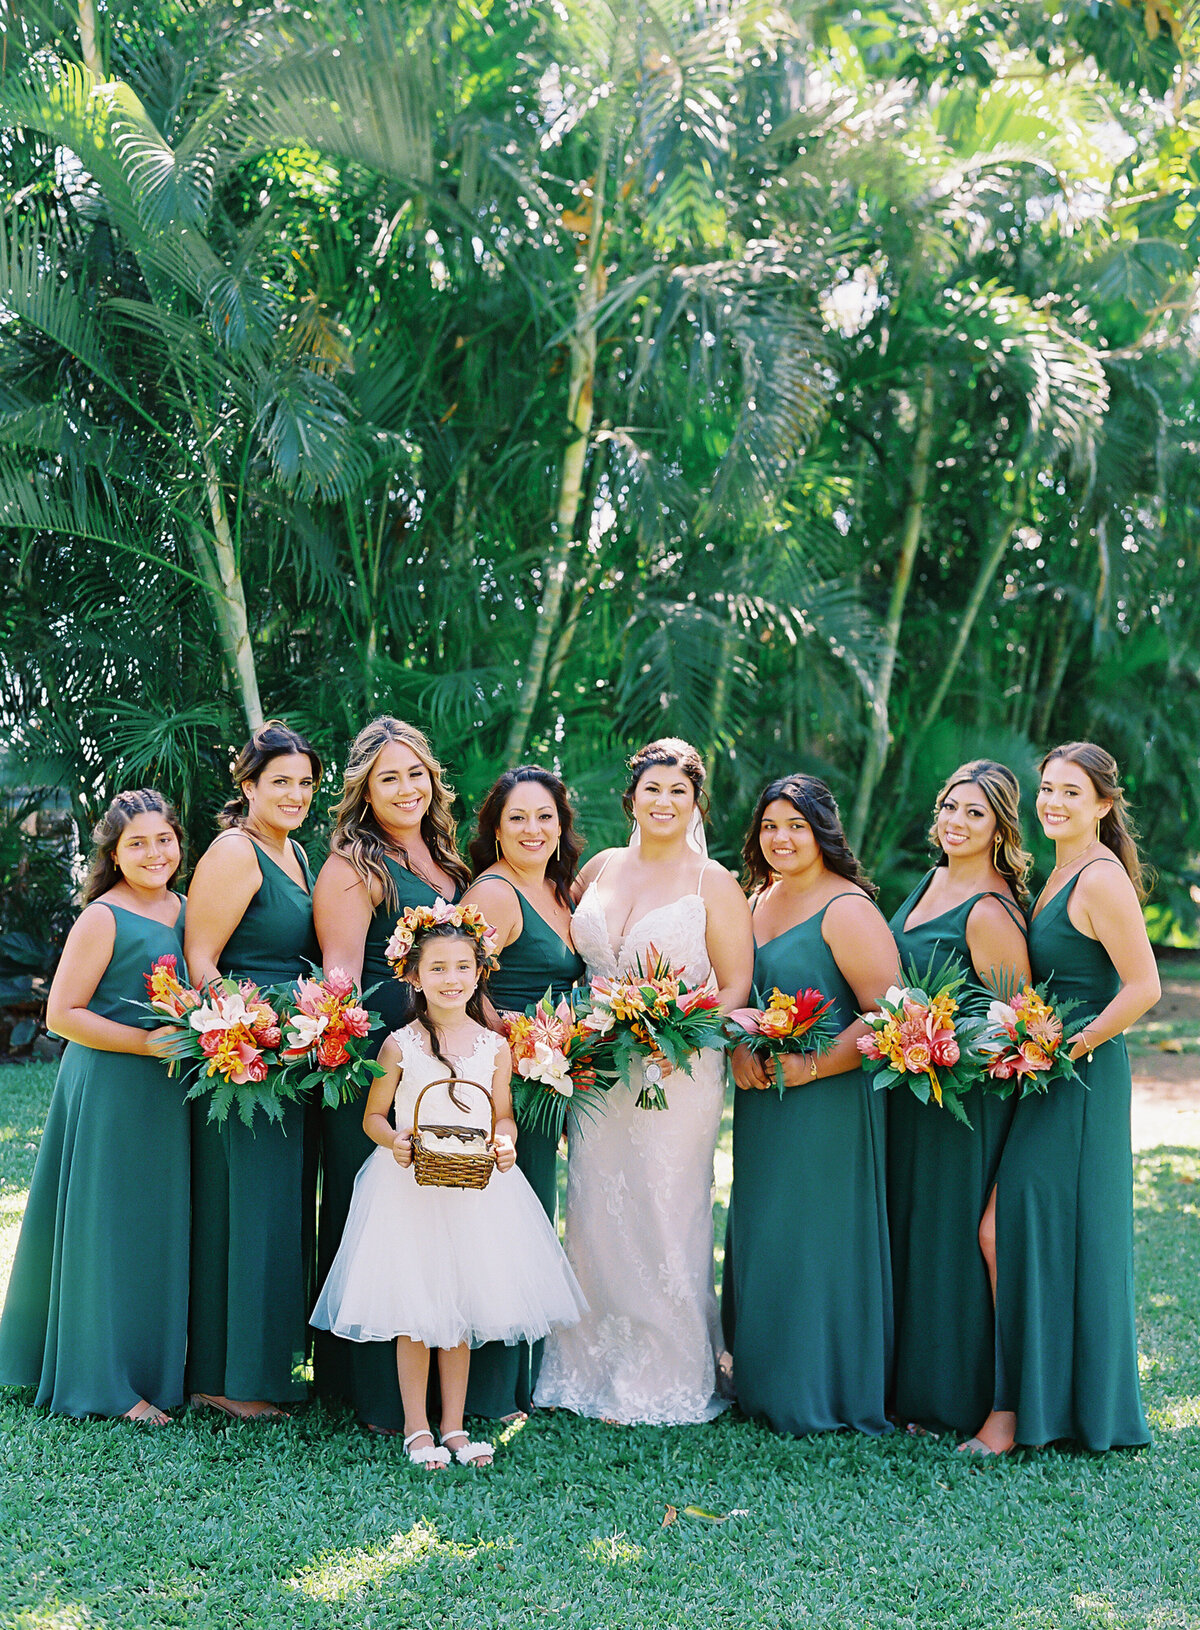 Maui Love Weddings and Events Maui Hawaii Full Service Wedding Planning Coordinating Event Design Company Destination Wedding 13